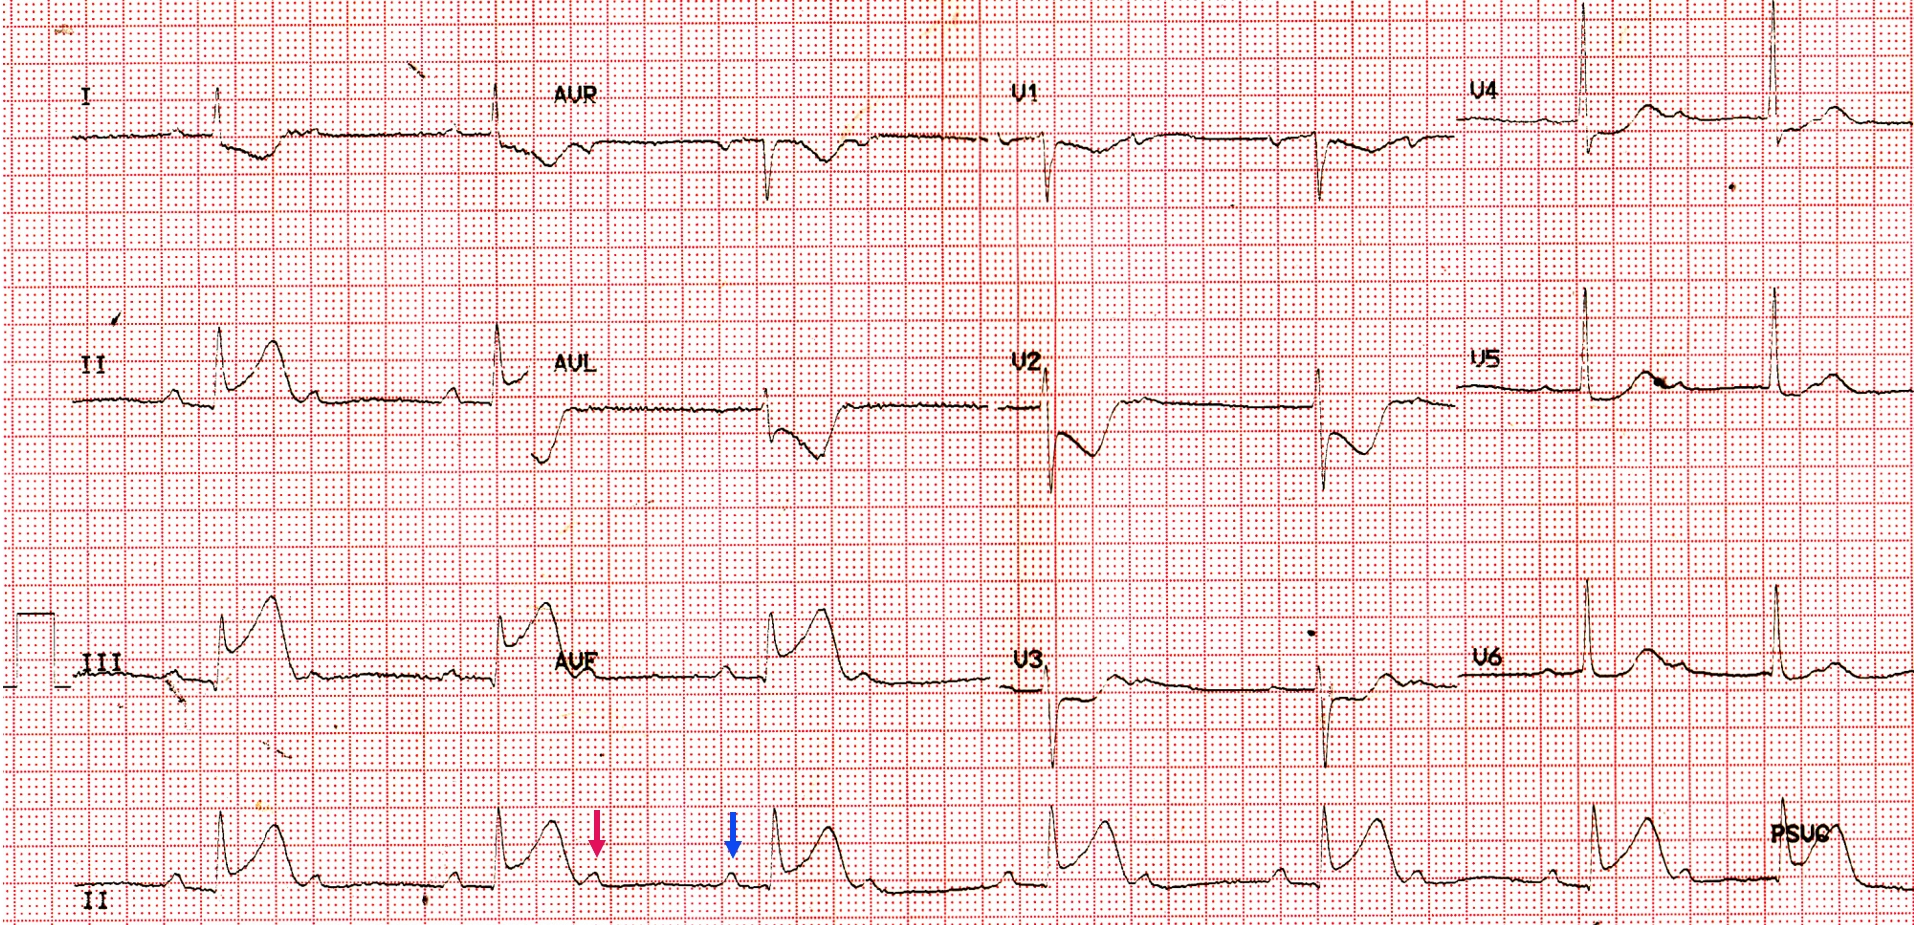 ECG in hyperacute phase of inferior wall myocardial infarction with 2:1 AV block